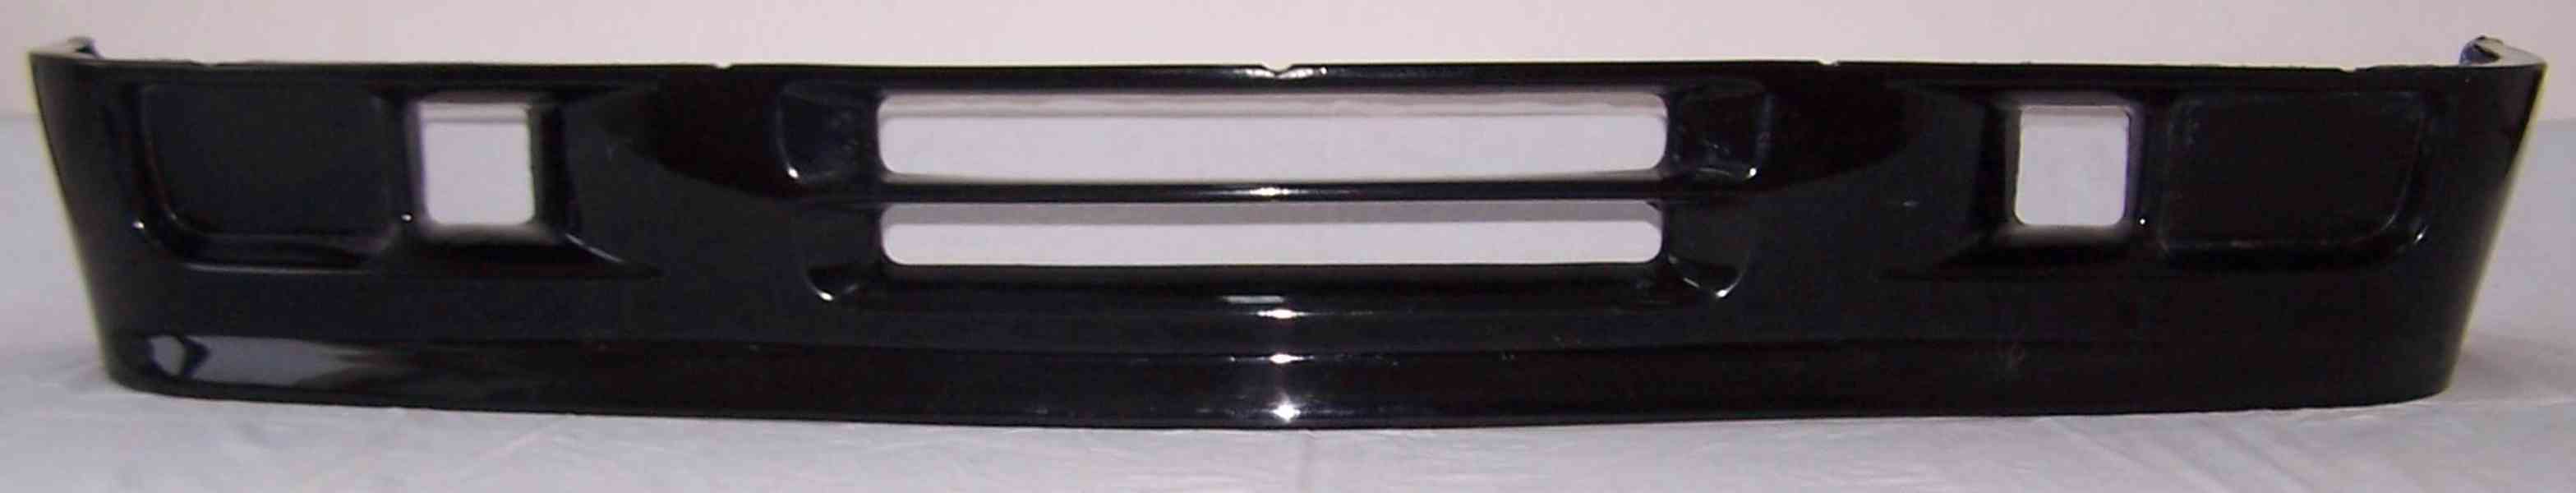 bmw e30 3 III spoilery podspoilery predni zadni prahy kridlo - foto 14